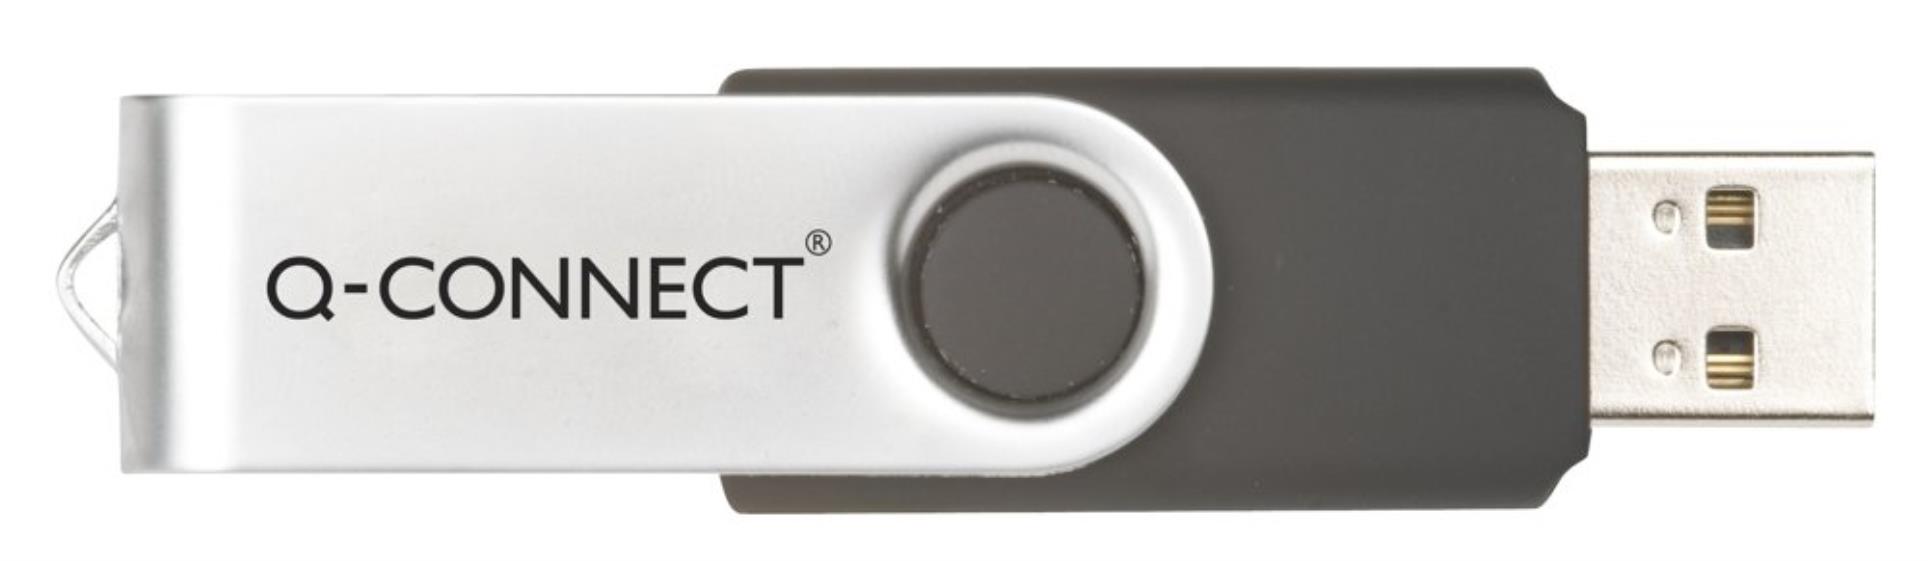 Flash disk Q-Connect USB 2.0 - 16 GB